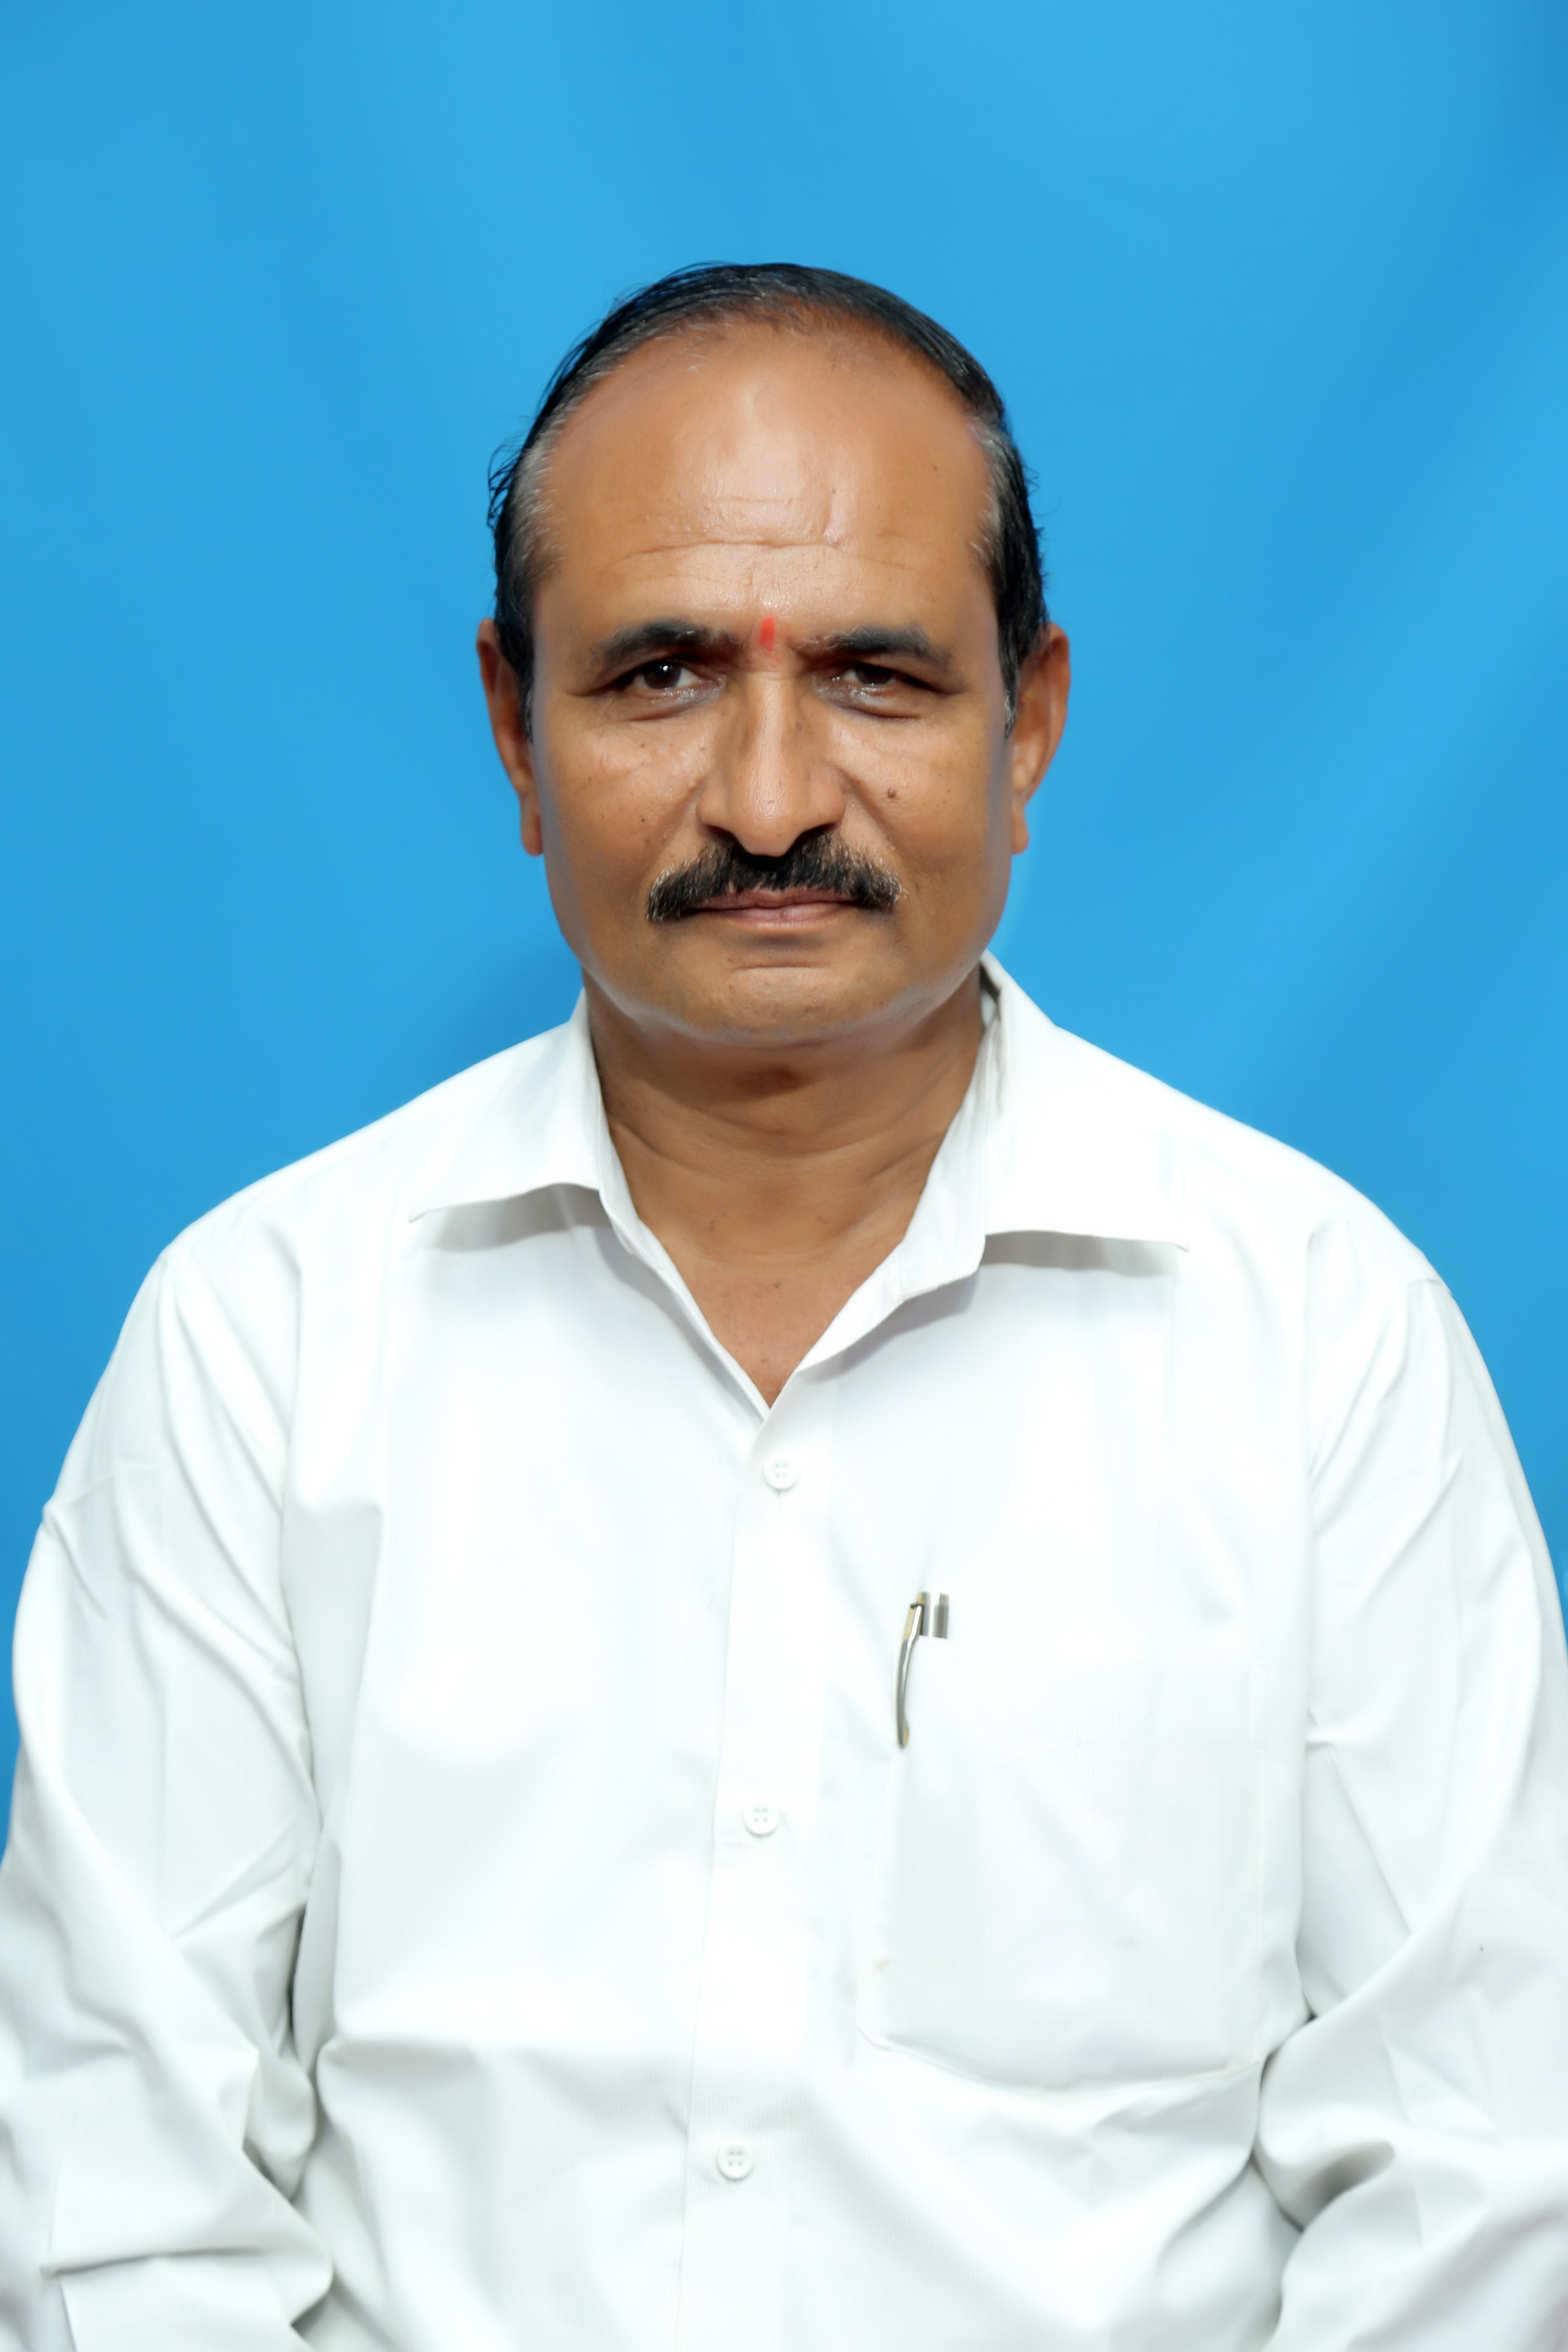 Mr. Umesh Joshi